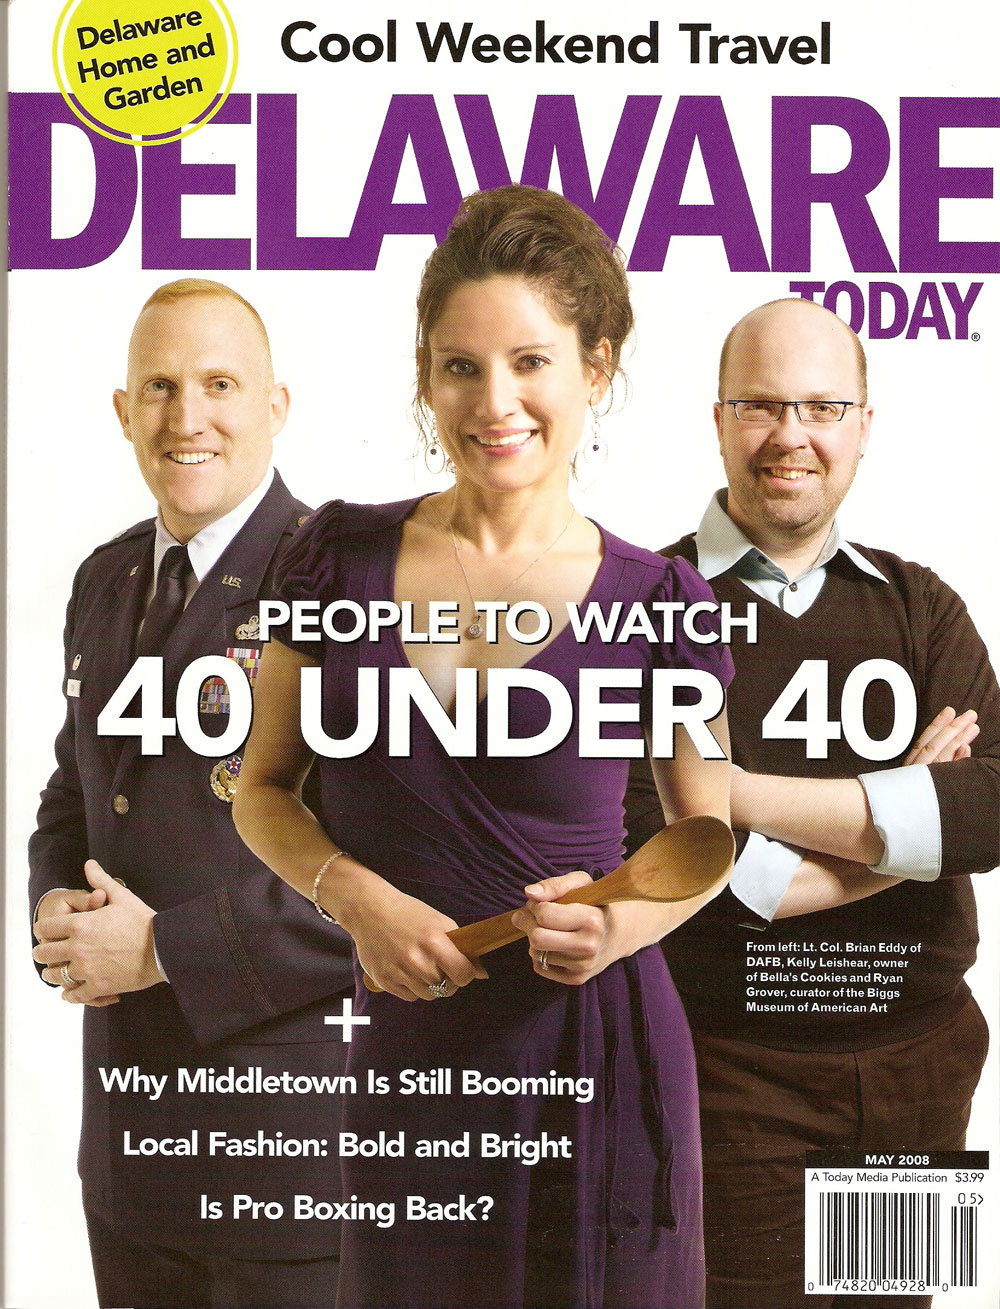 Delaware Today Magazine - 40 under 40